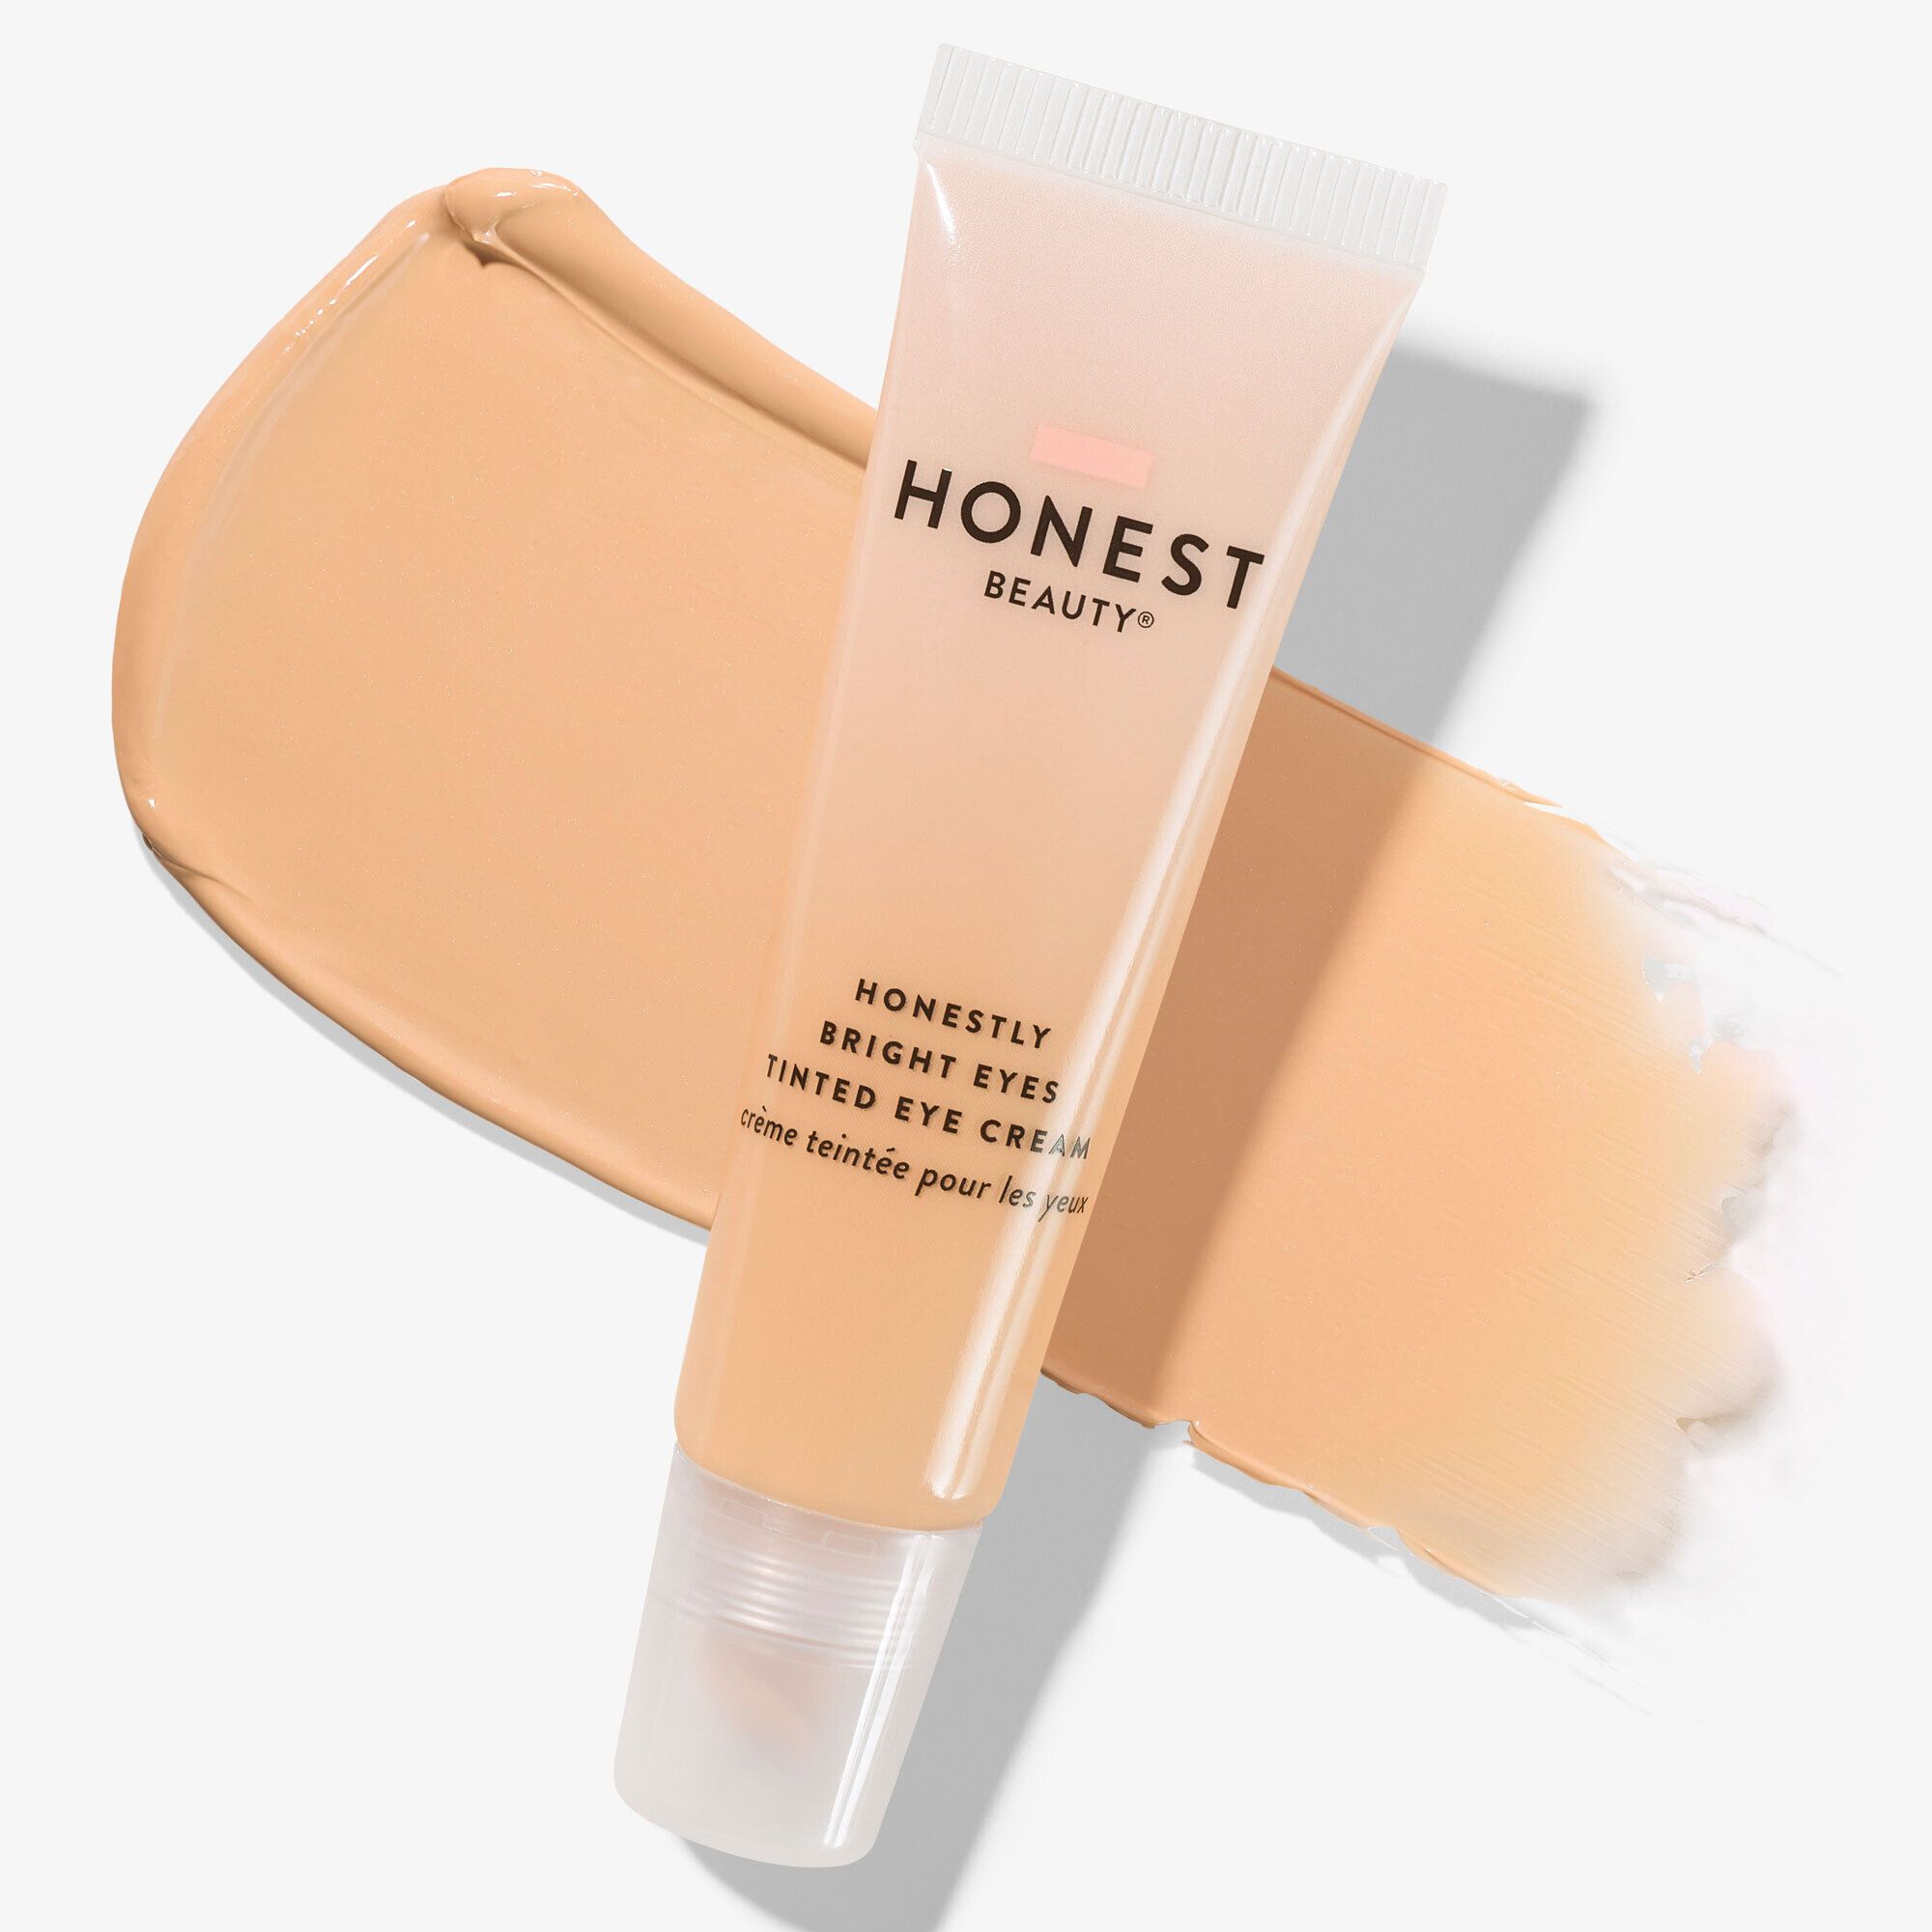 Honestly Bright Eyes Tinted Eye Cream, Sandstone | The Honest Company